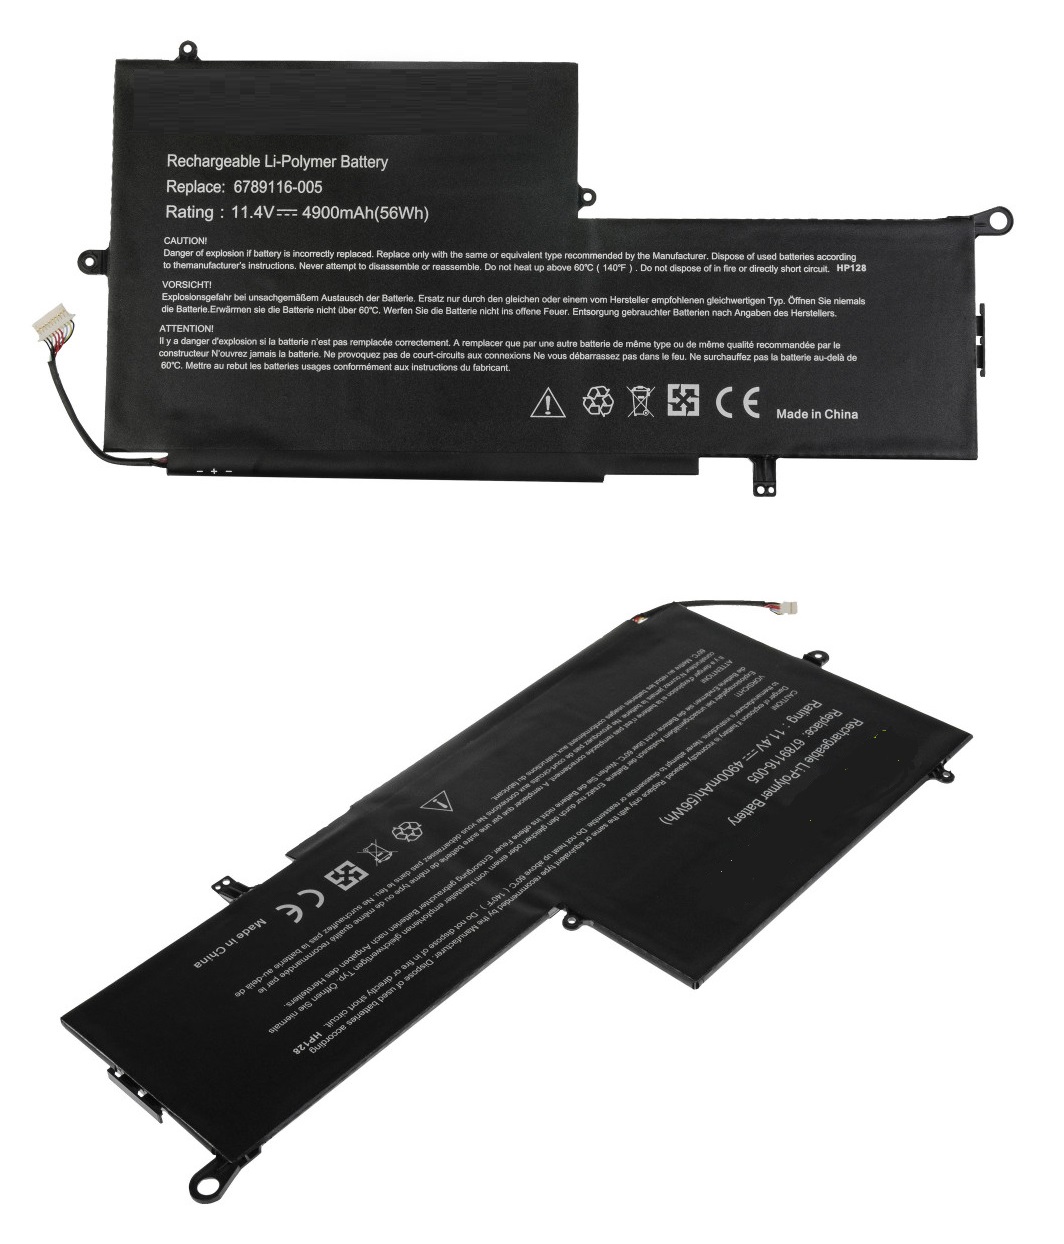 HP Spectre x360 13-002ne L0B52ea Laptop Battery